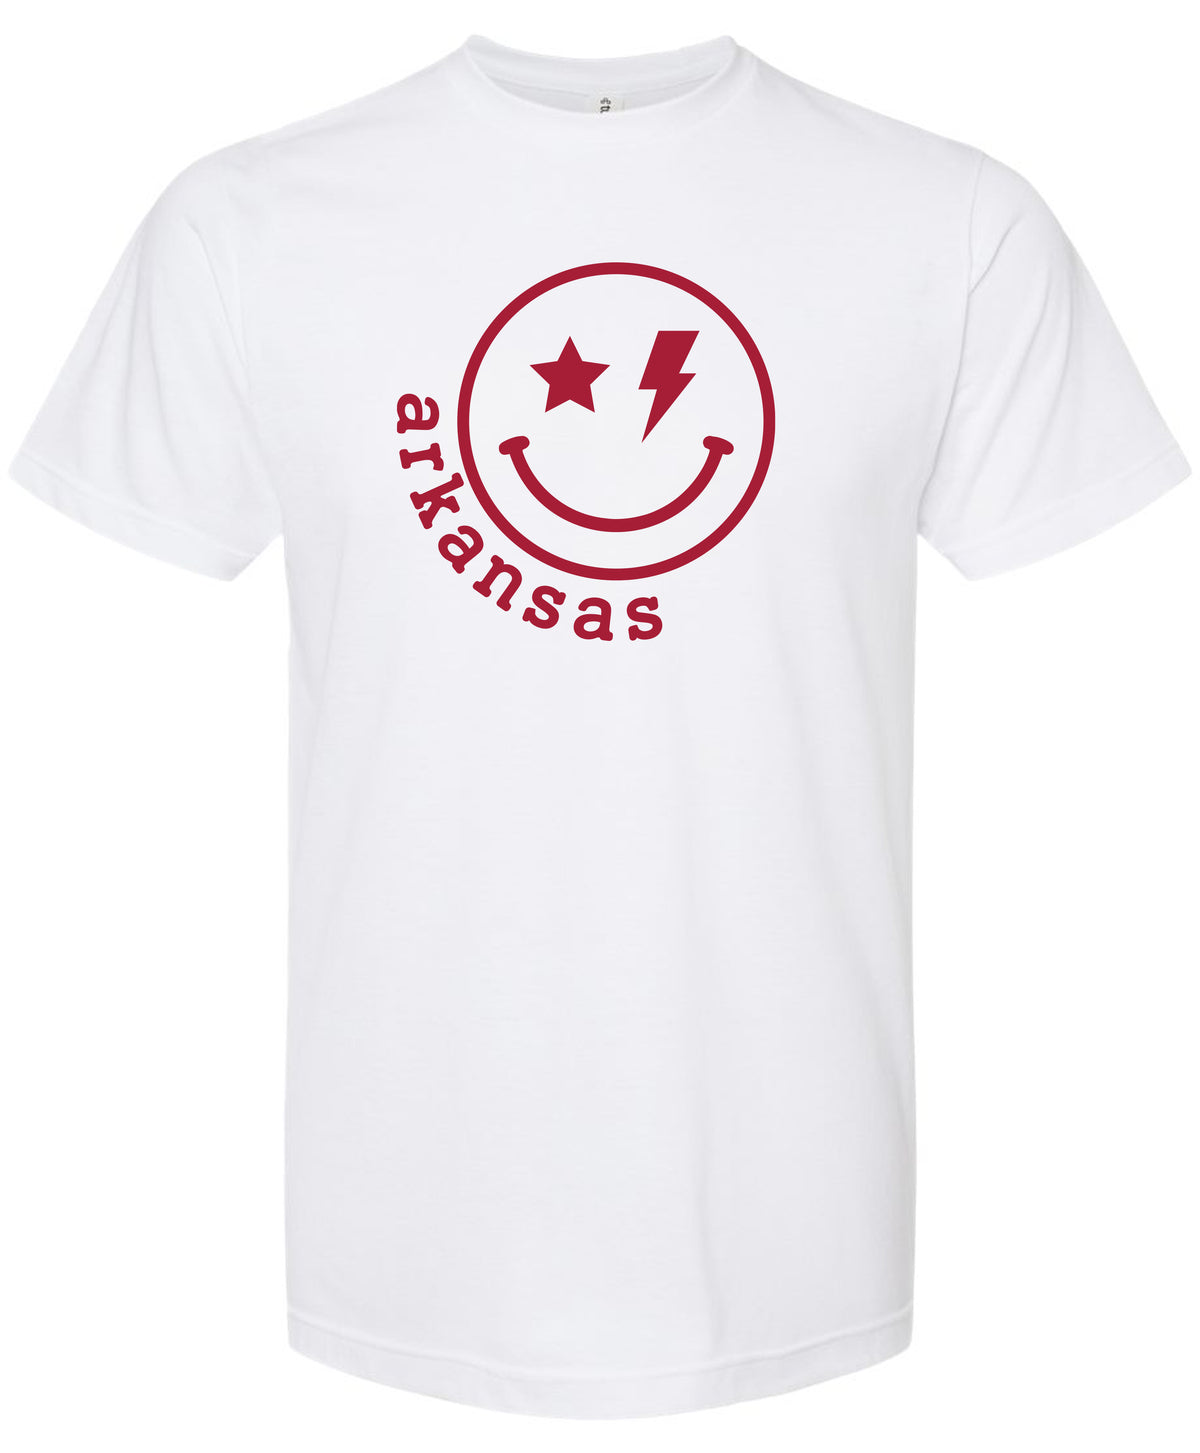 Arkansas Star/Bolt Smiley T-Shirt